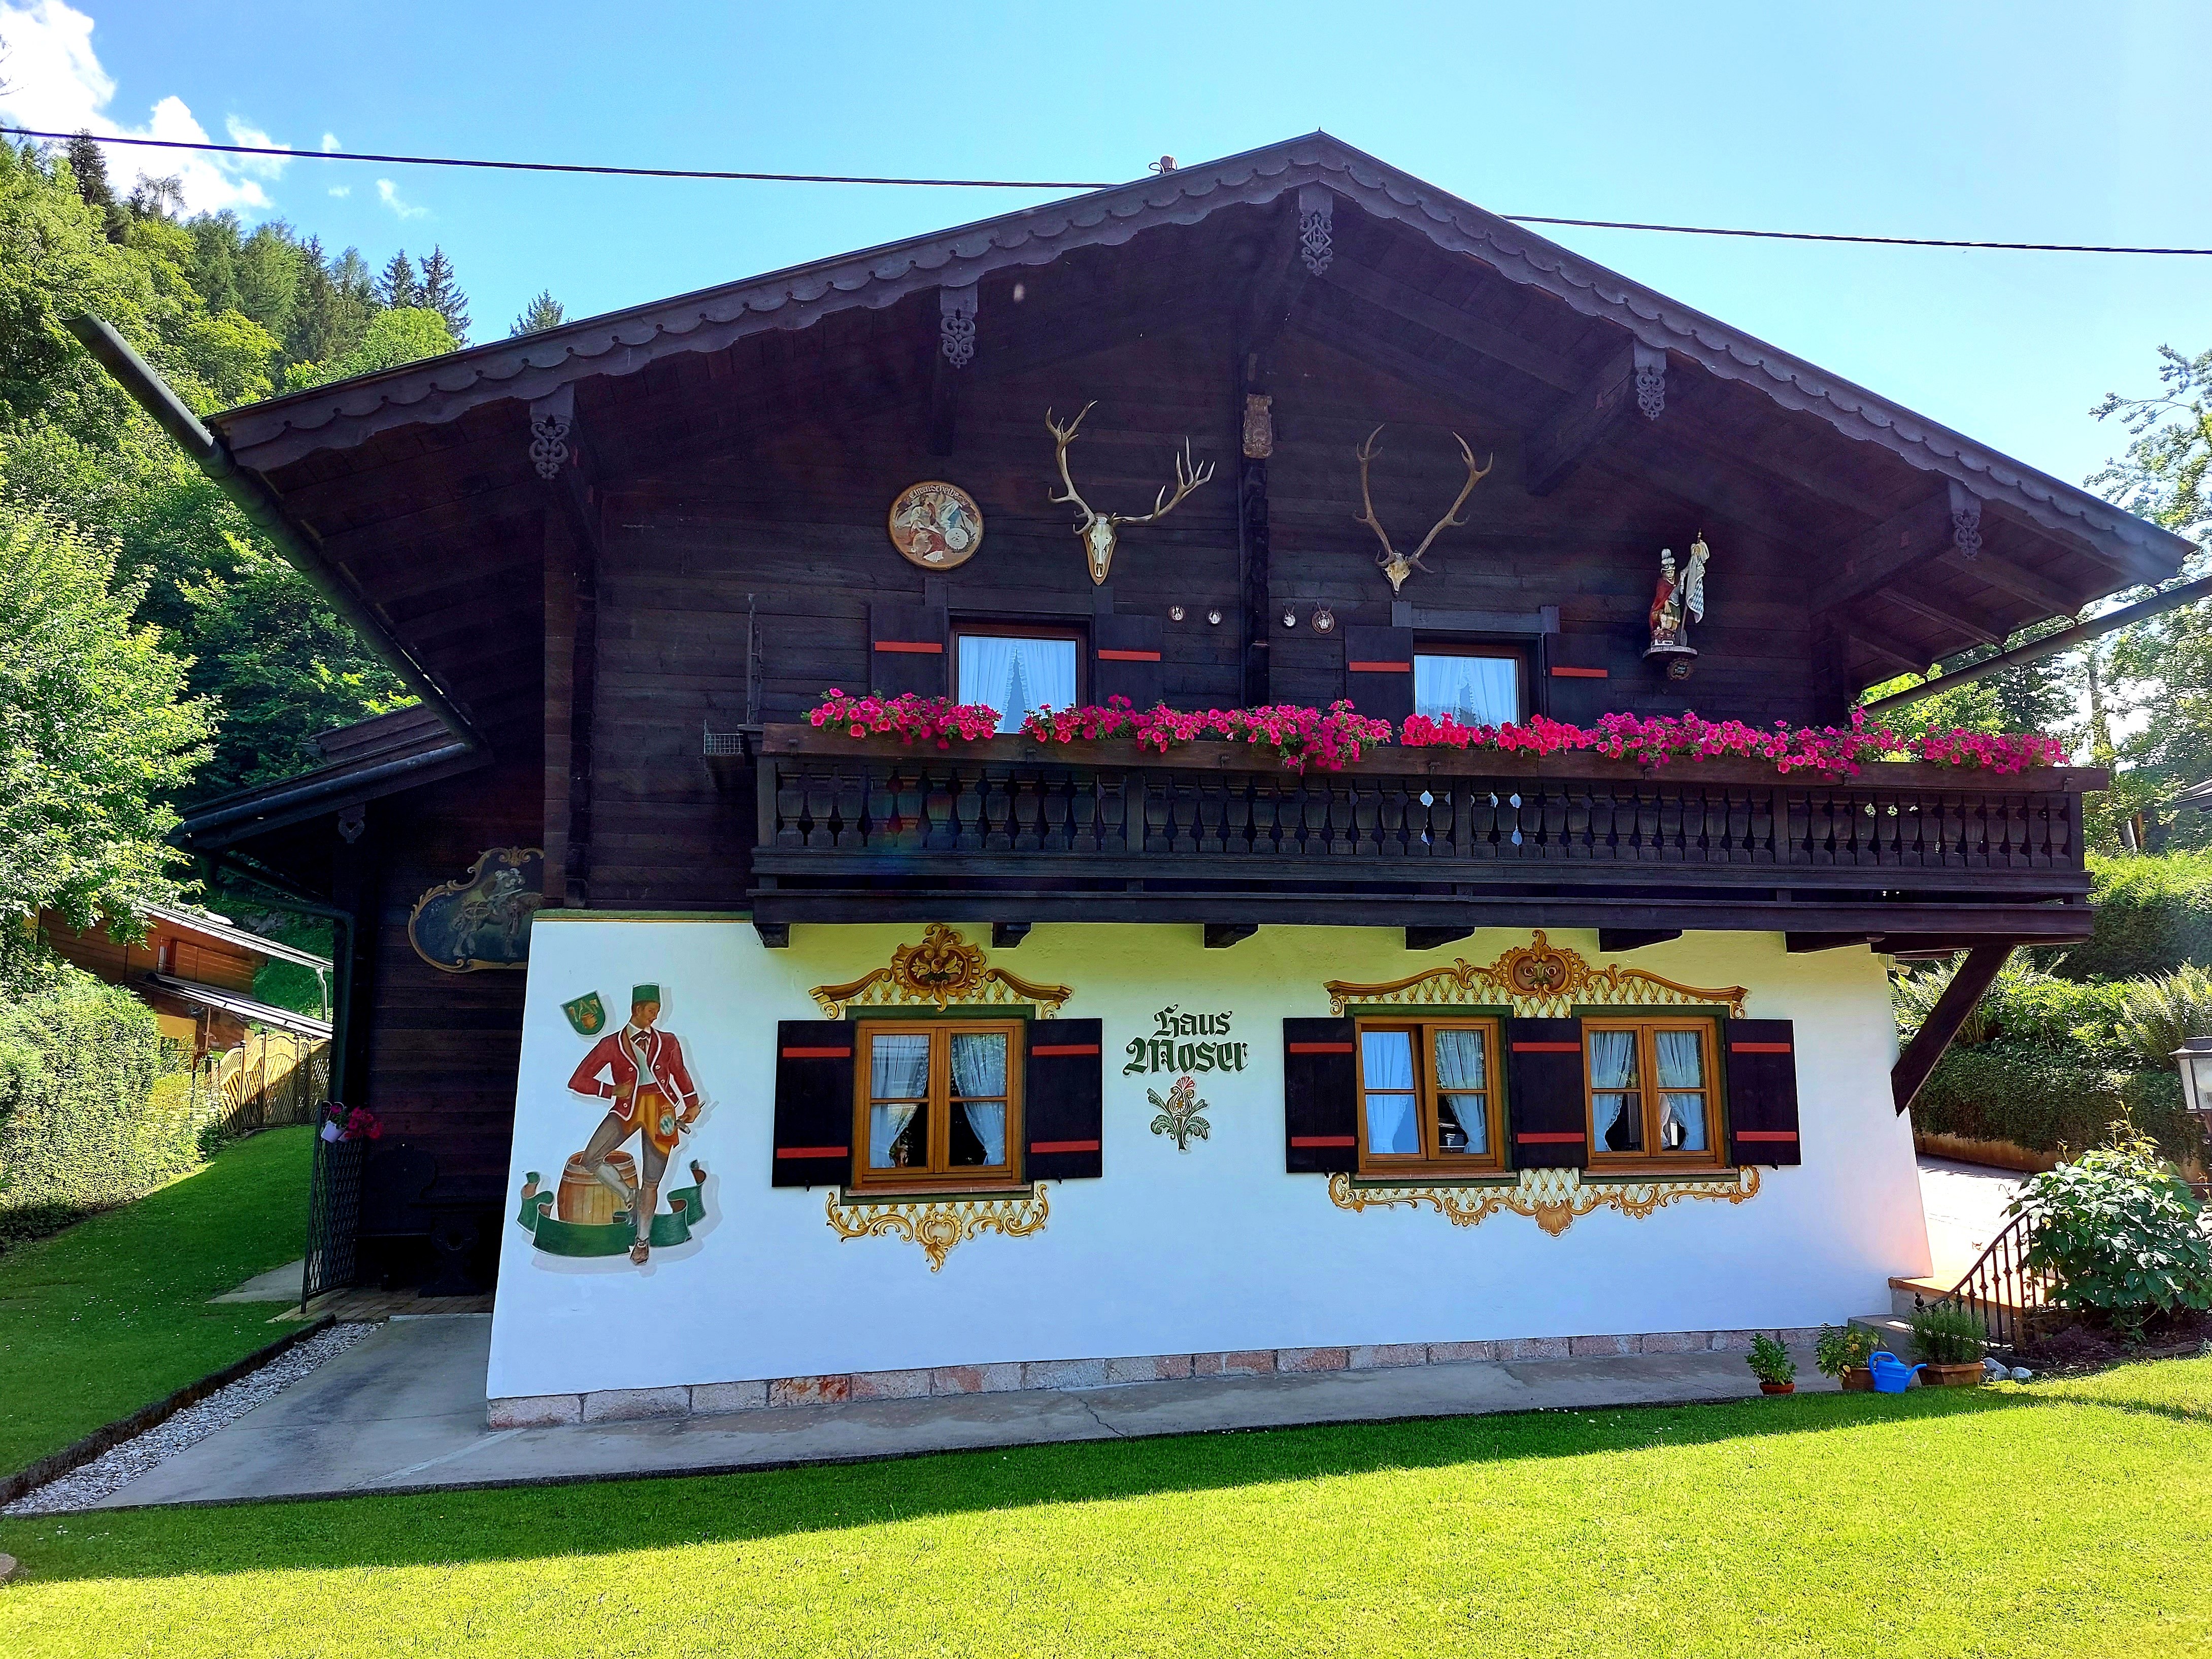 Ferienwohnungen Haus Moser (DE Berchtesgaden). Fer Ferienwohnung  Berchtesgadener Land